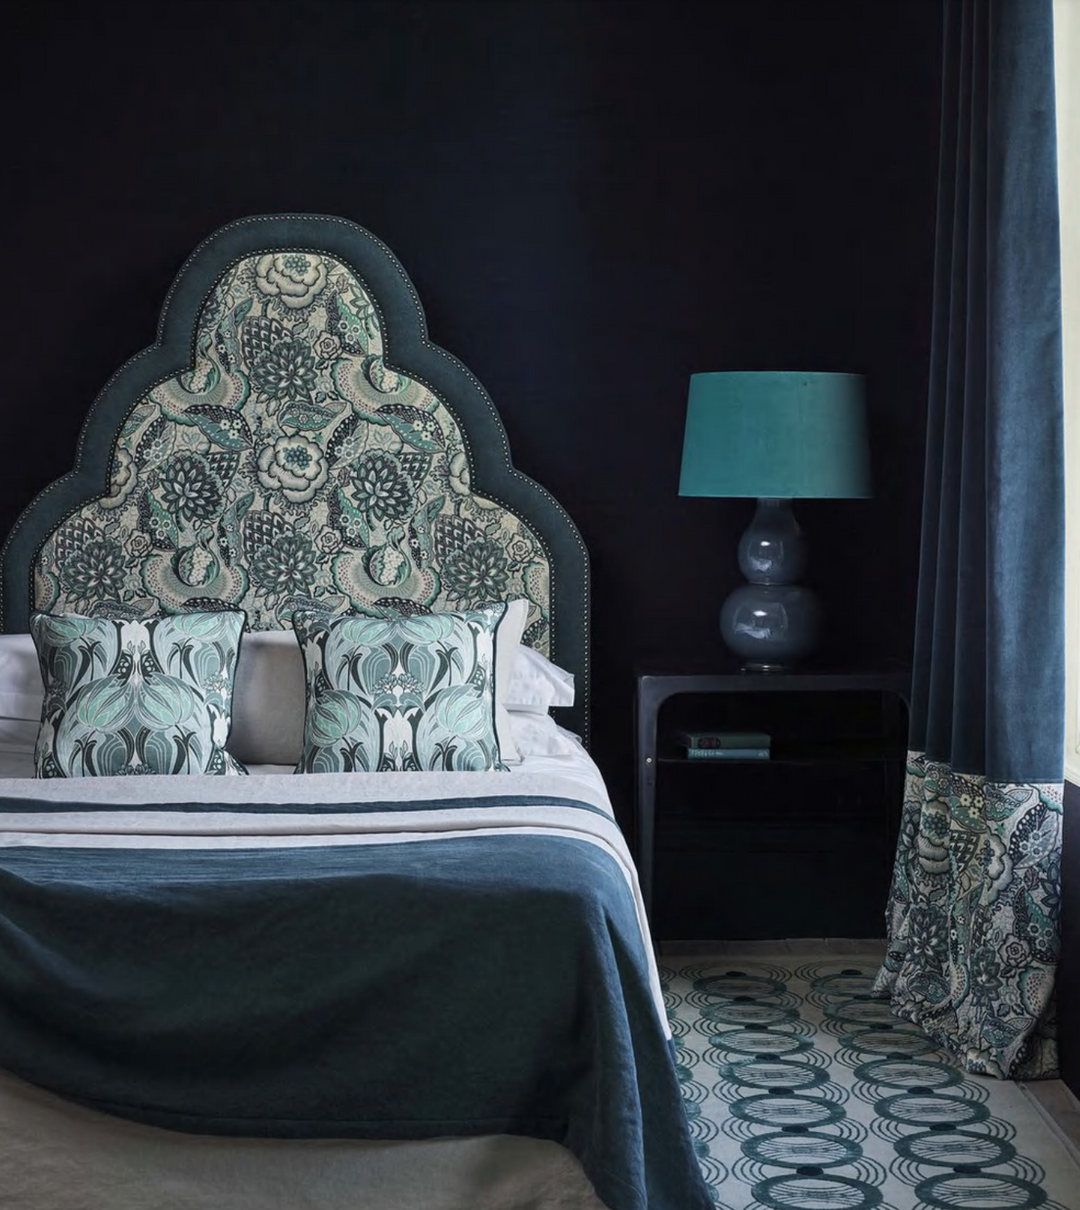 patricia-liberty-favric-velvet-jade-green-blue-colourway-headboard-luxury-hotel-bedroom